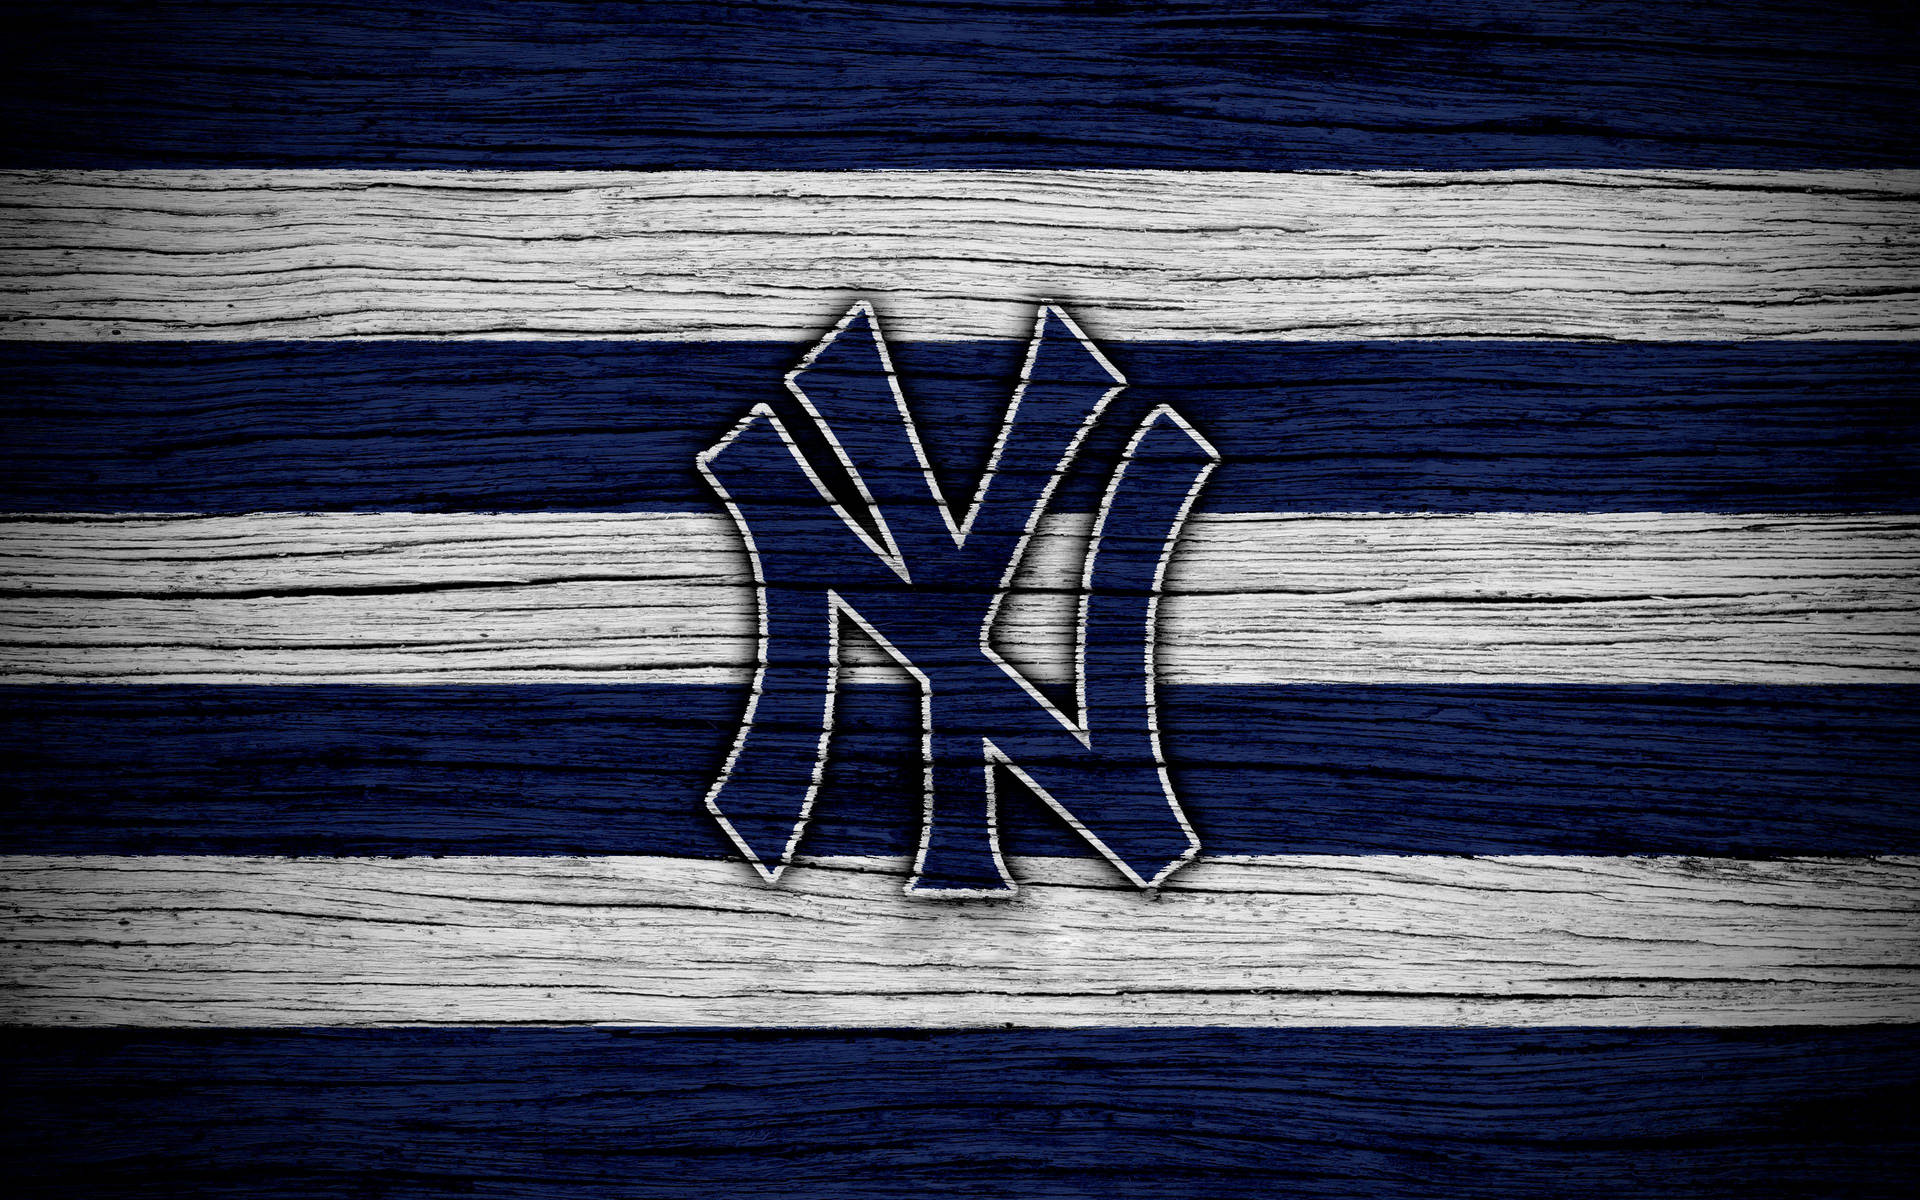 Yankees Bilder